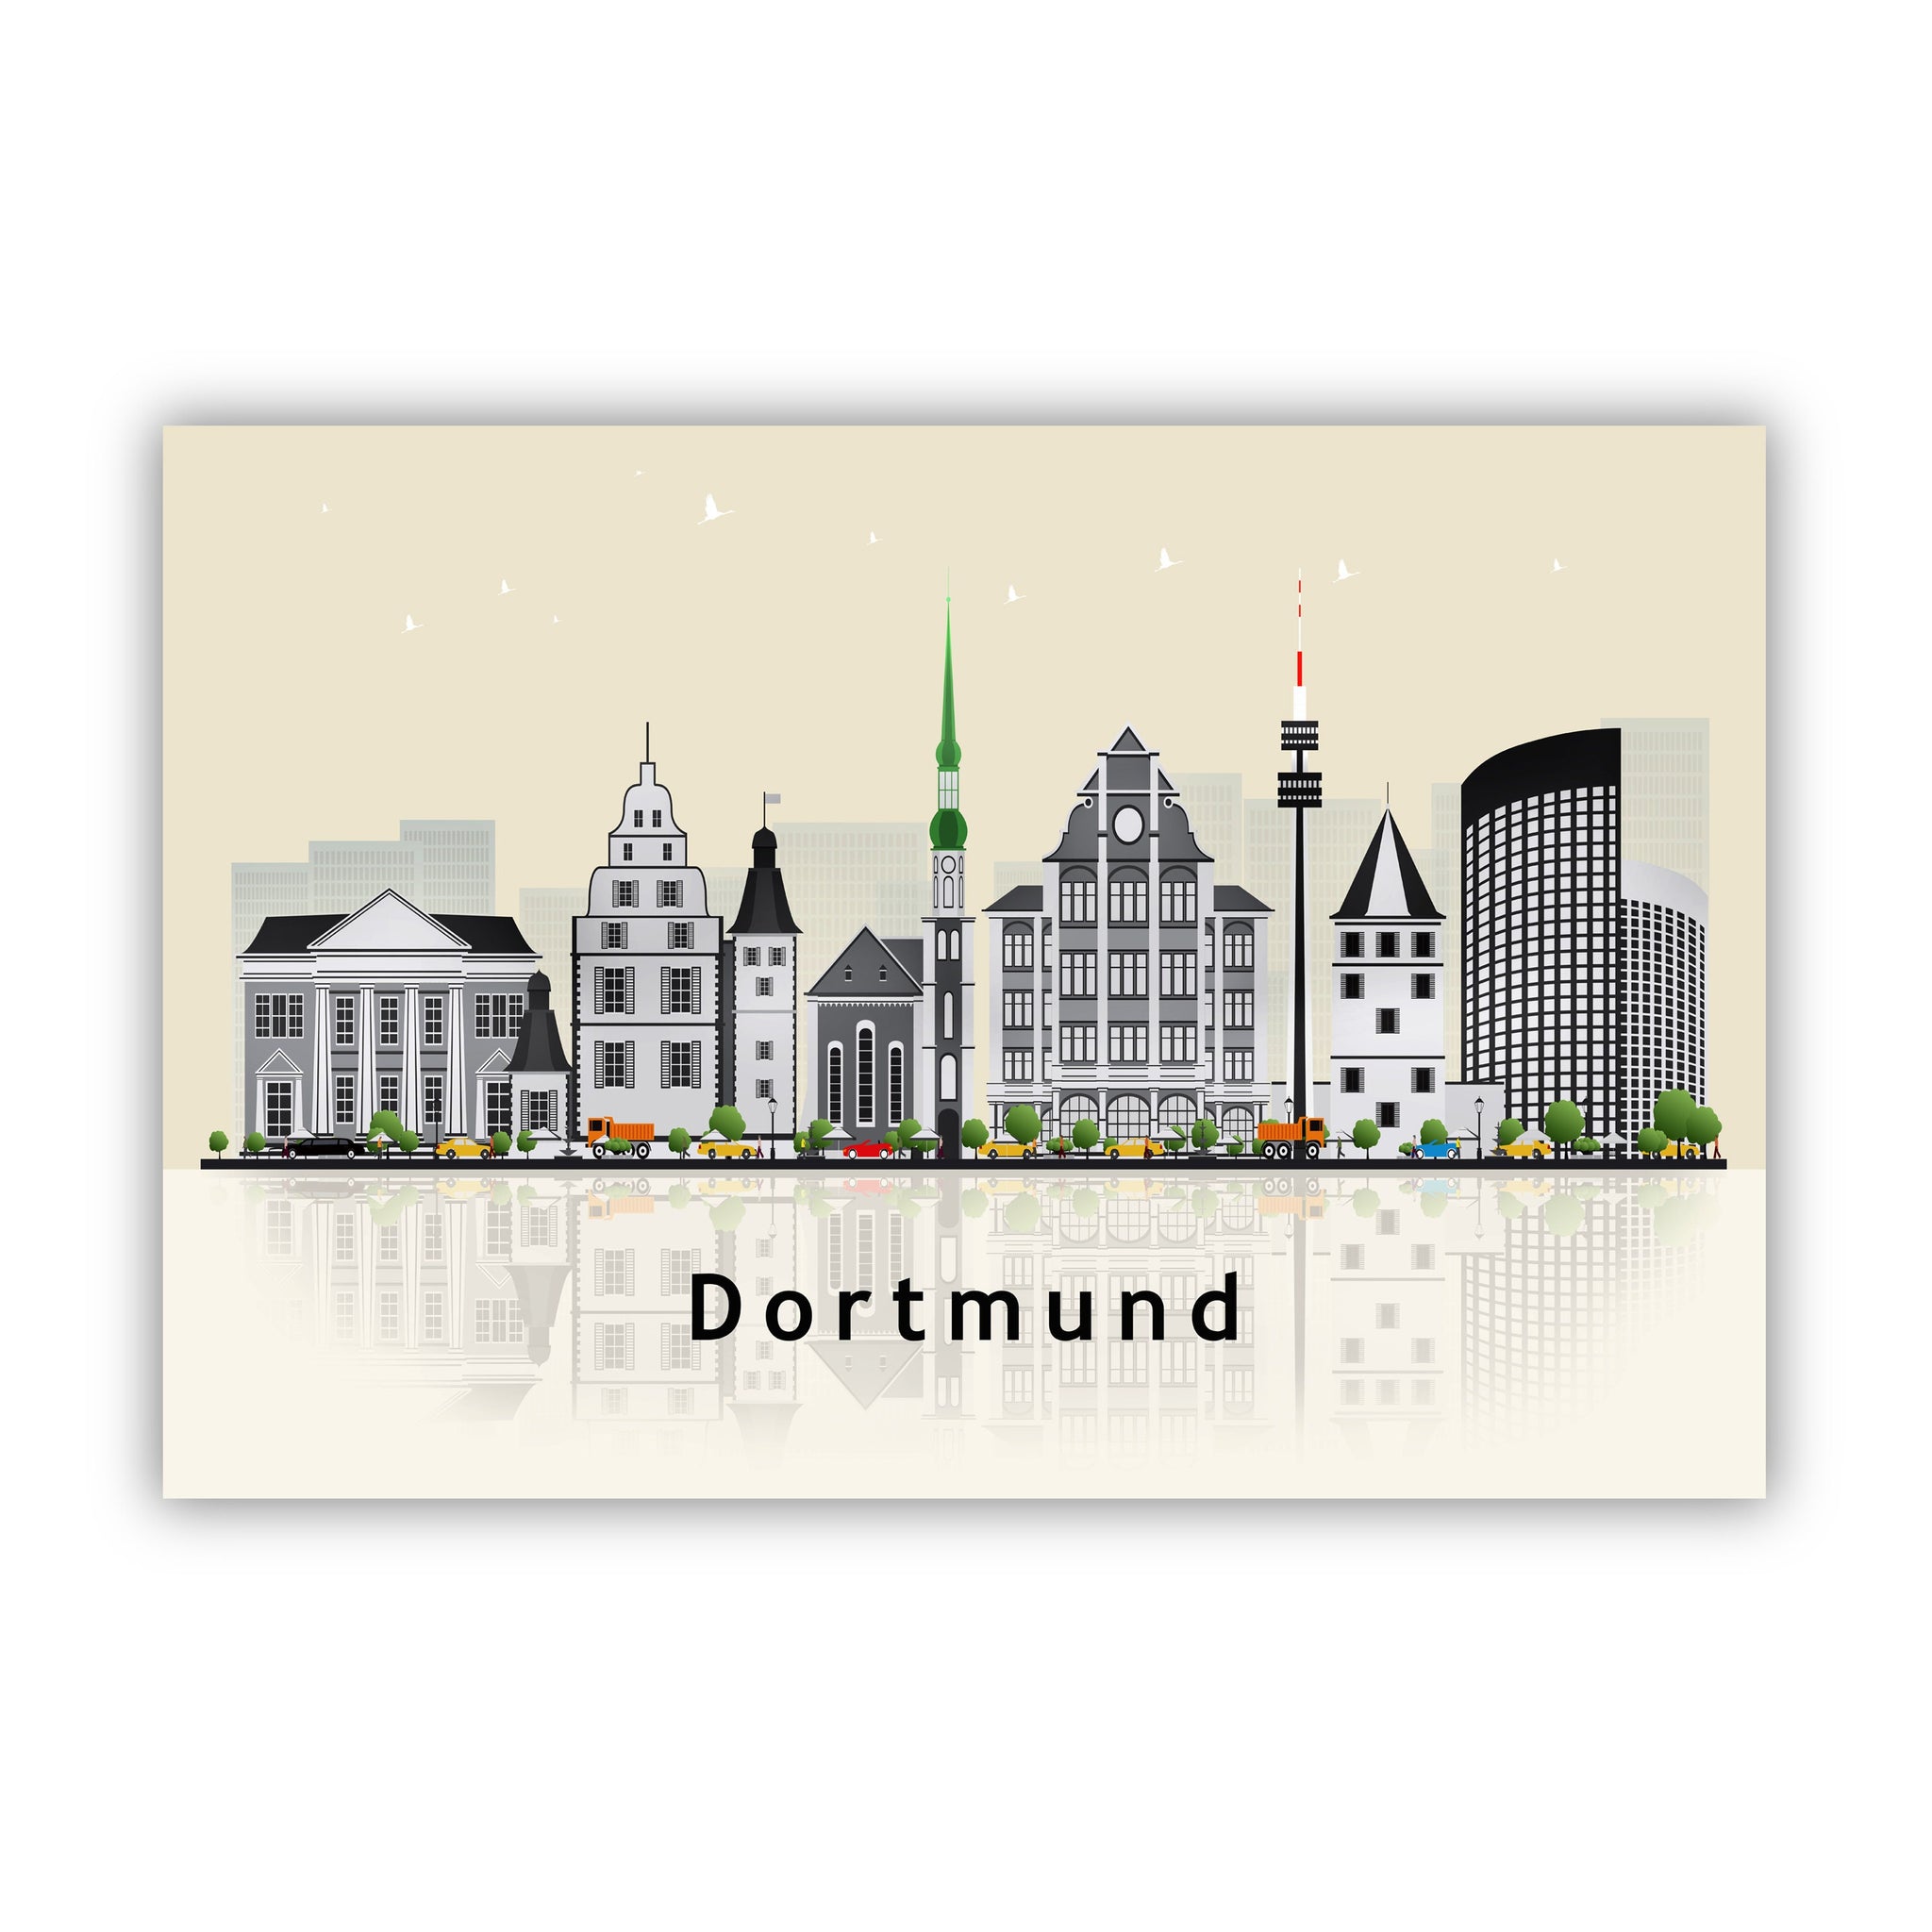 DORTMUND GERMANY Illustration skyline poster, Dortmund modern skyline cityscape poster print, Landmark map poster, Home wall art decoration